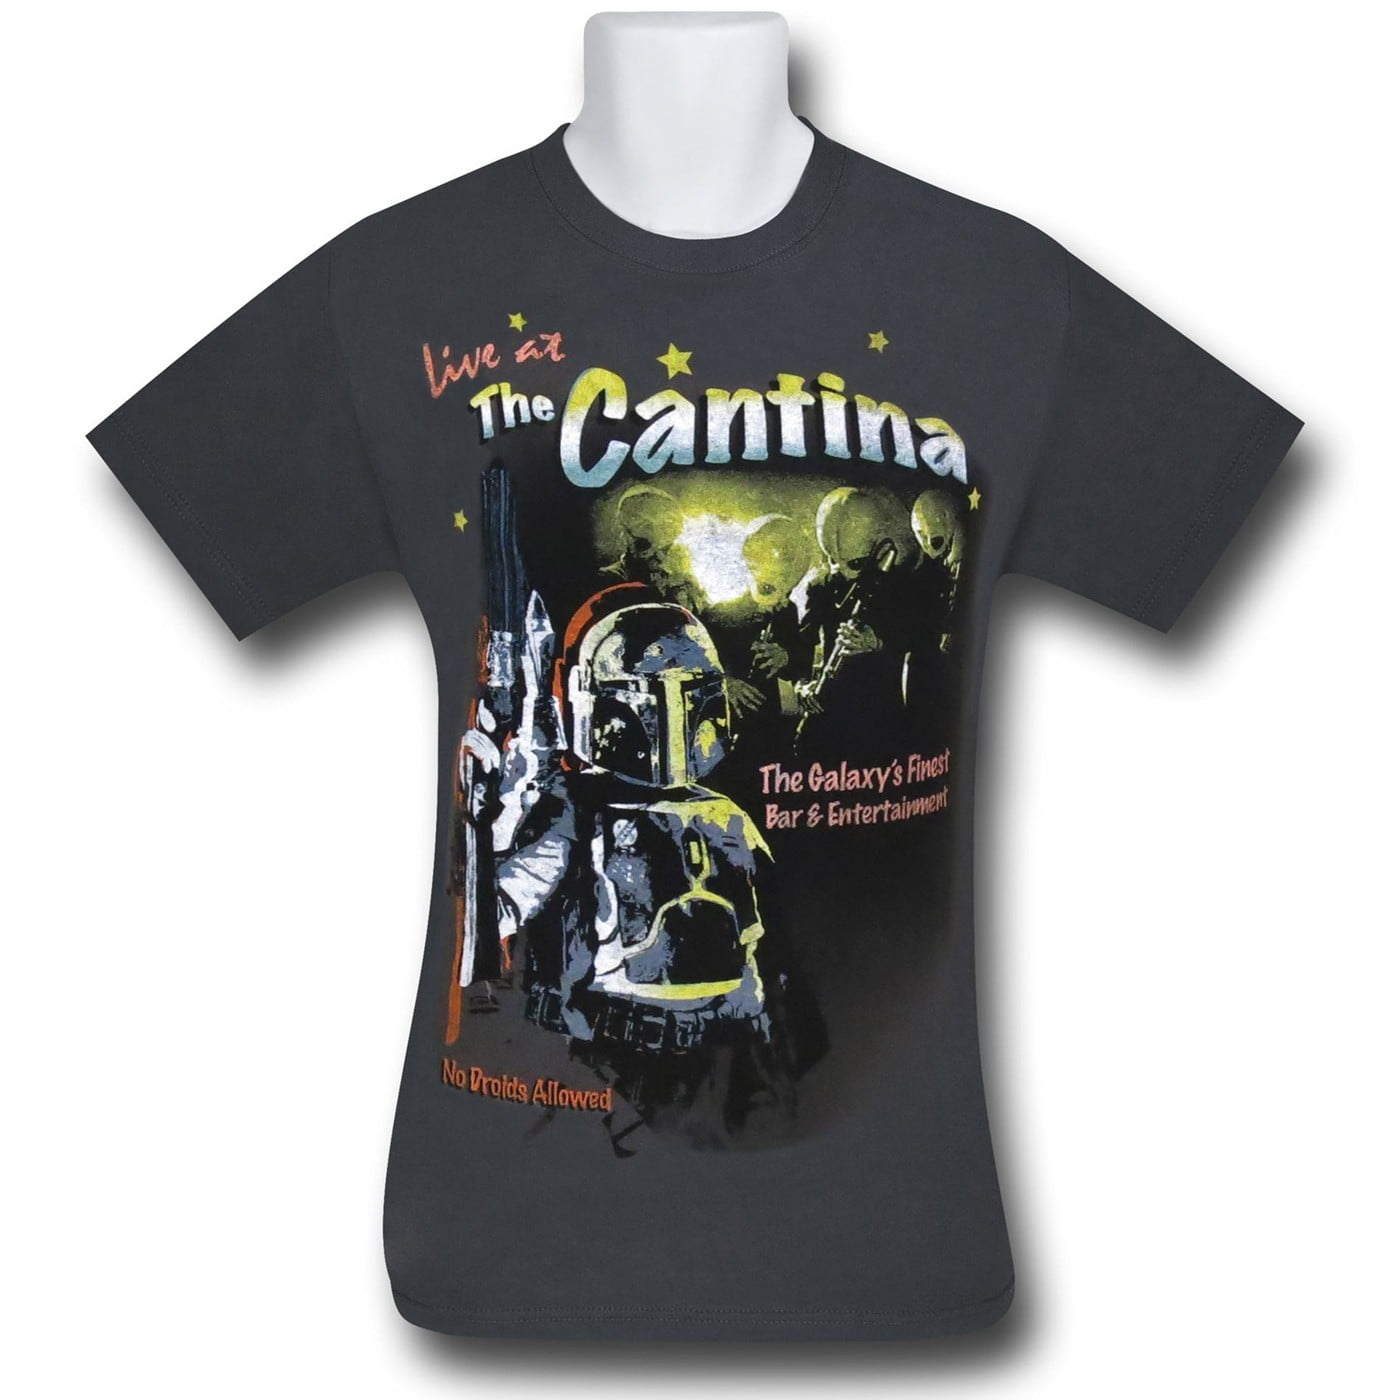 Star Wars Live at the Cantina w/Boba Fett Charcoal Men's T-Shirt New 